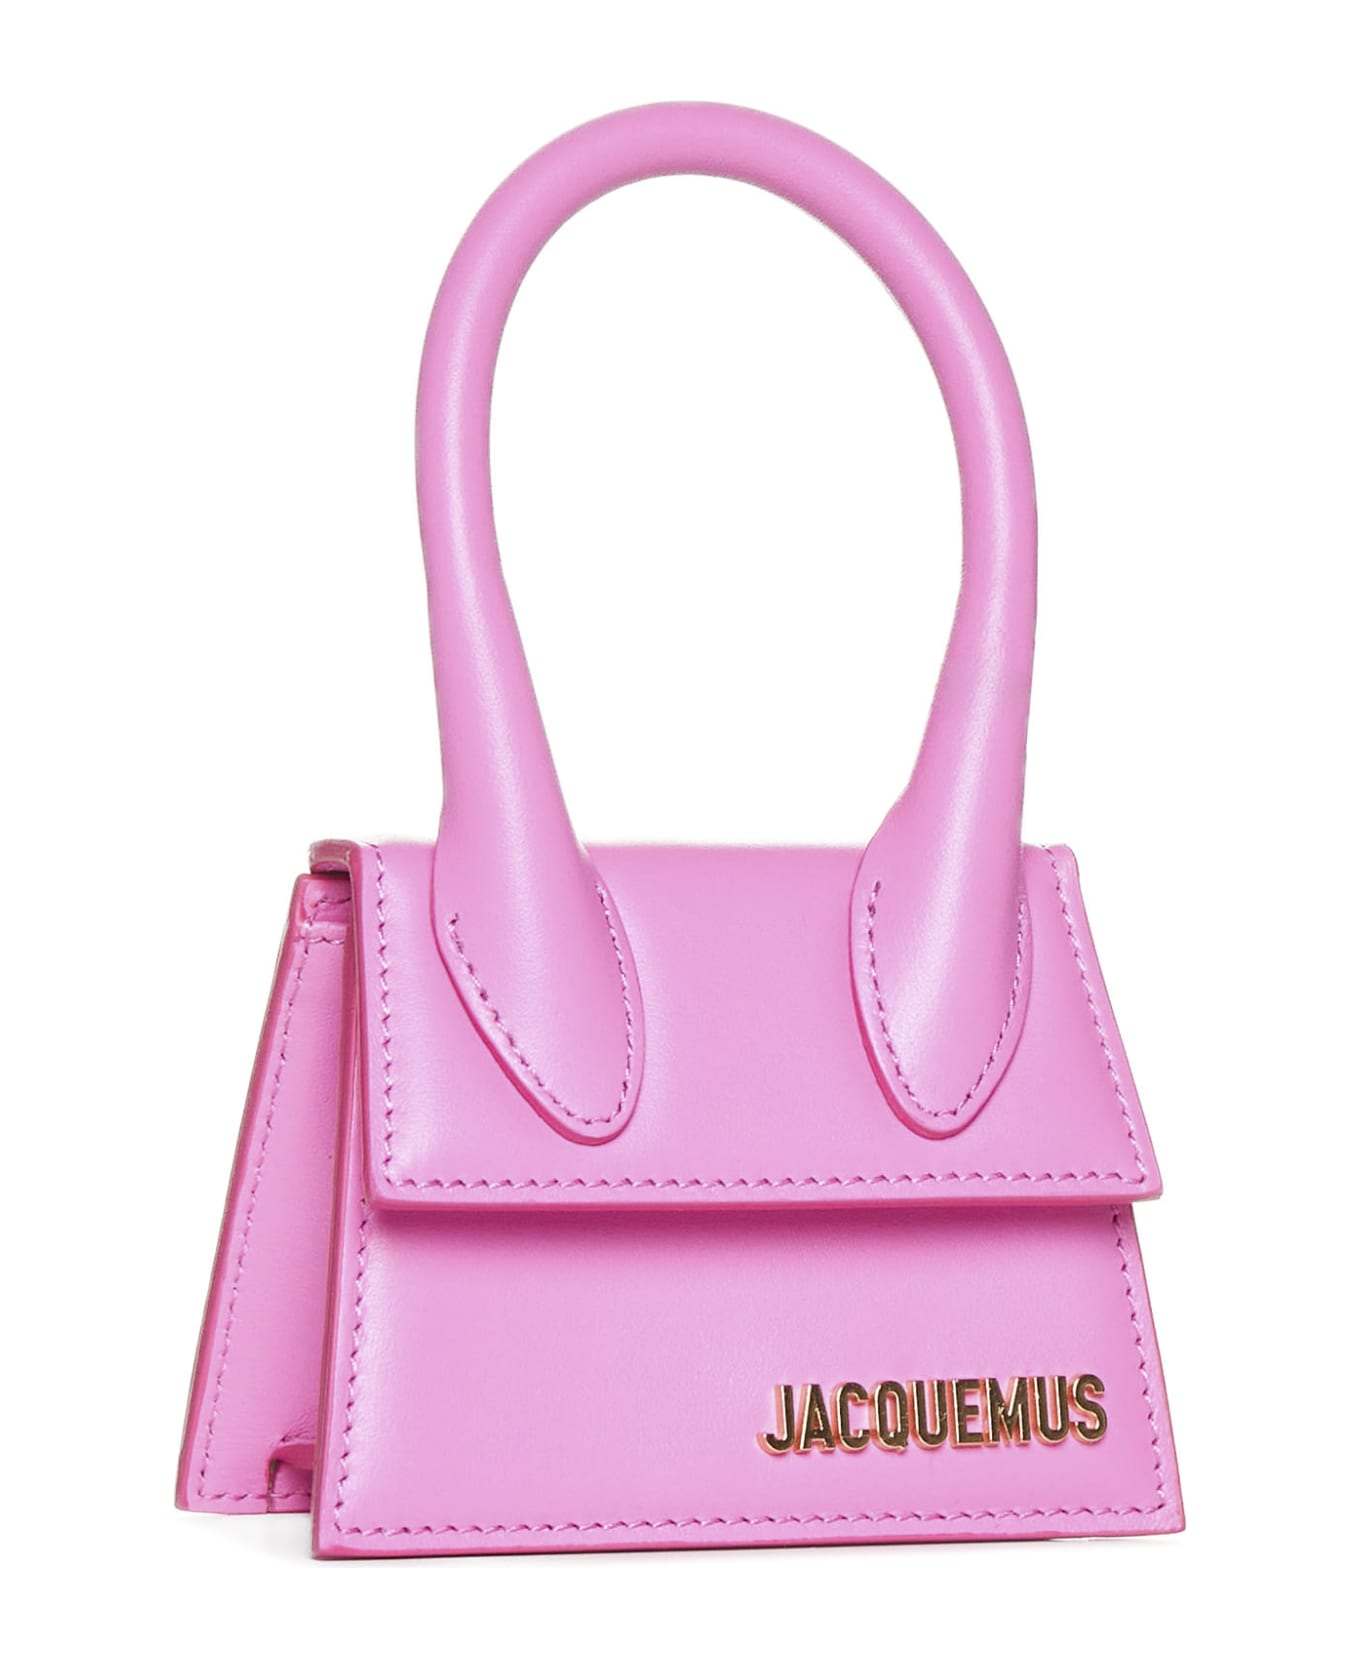 Jacquemus Le Chiquito Handbag - Neon pink